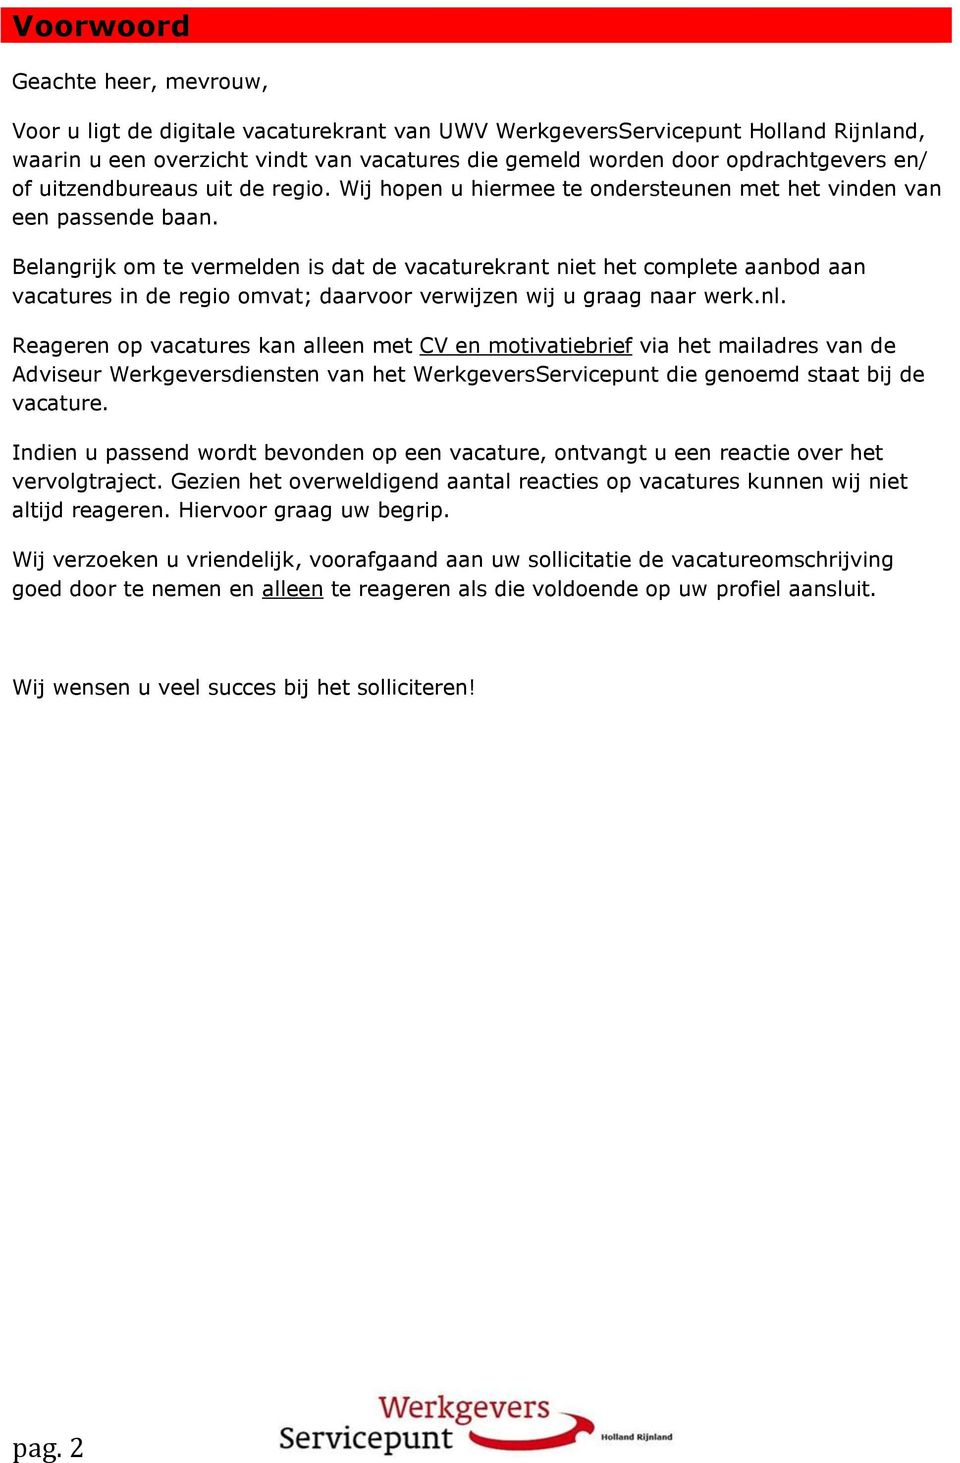 September Vacaturekrant Uwv Werkbedrijf Werkgeversservicepunt Lange Gracht Nh Leiden Pdf Free Download